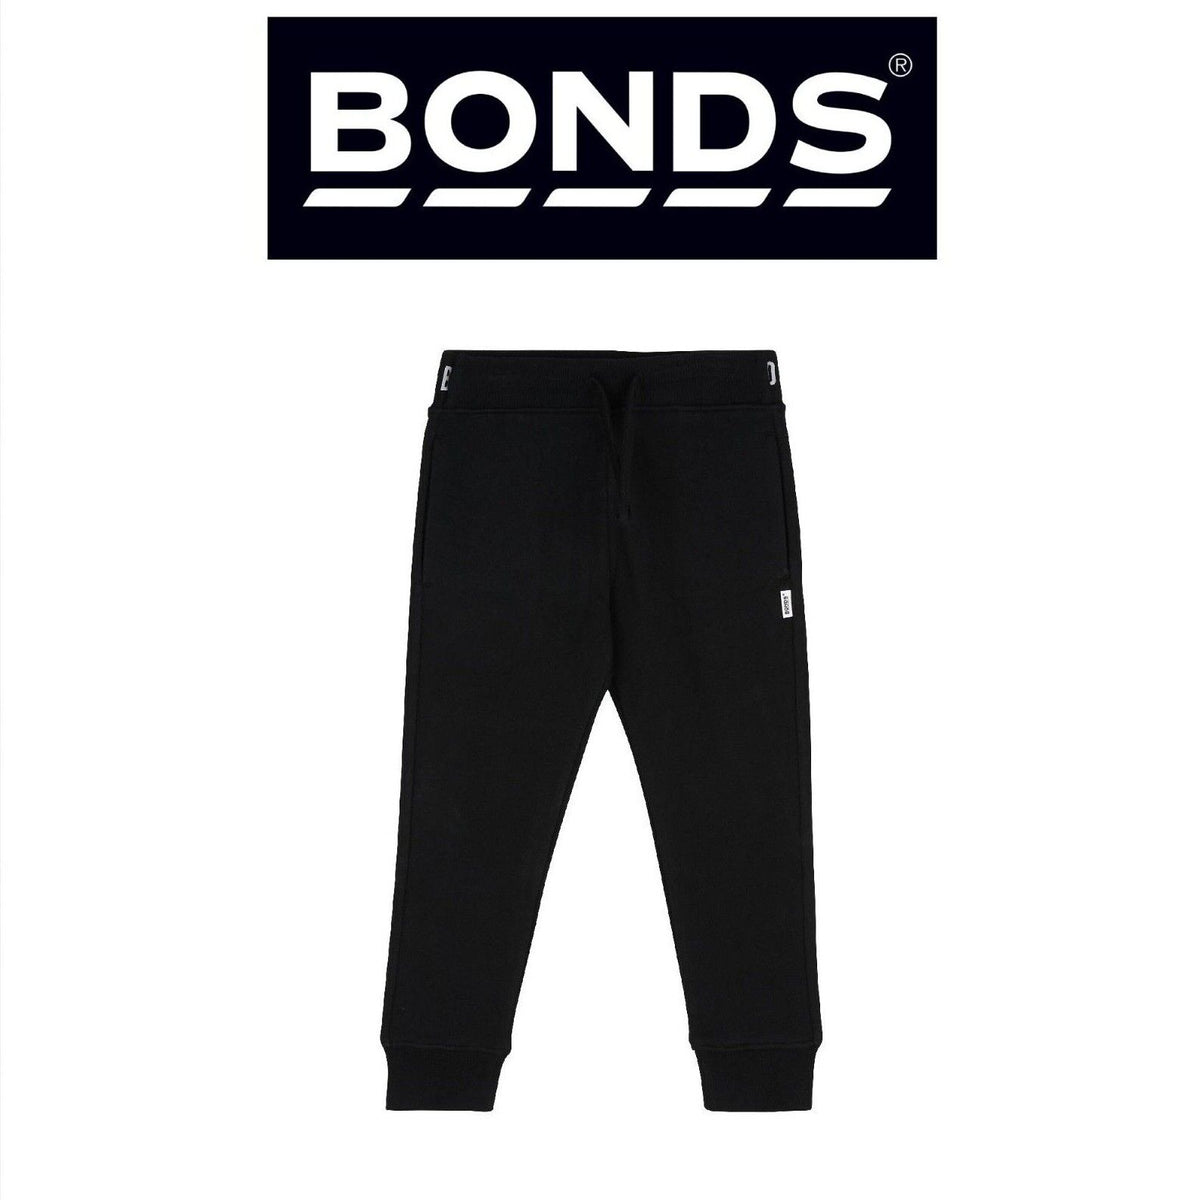 Bonds Kids Fleece Trackie Pants Roomy Drop Crotch Styling & Tapered Legs KVRJK